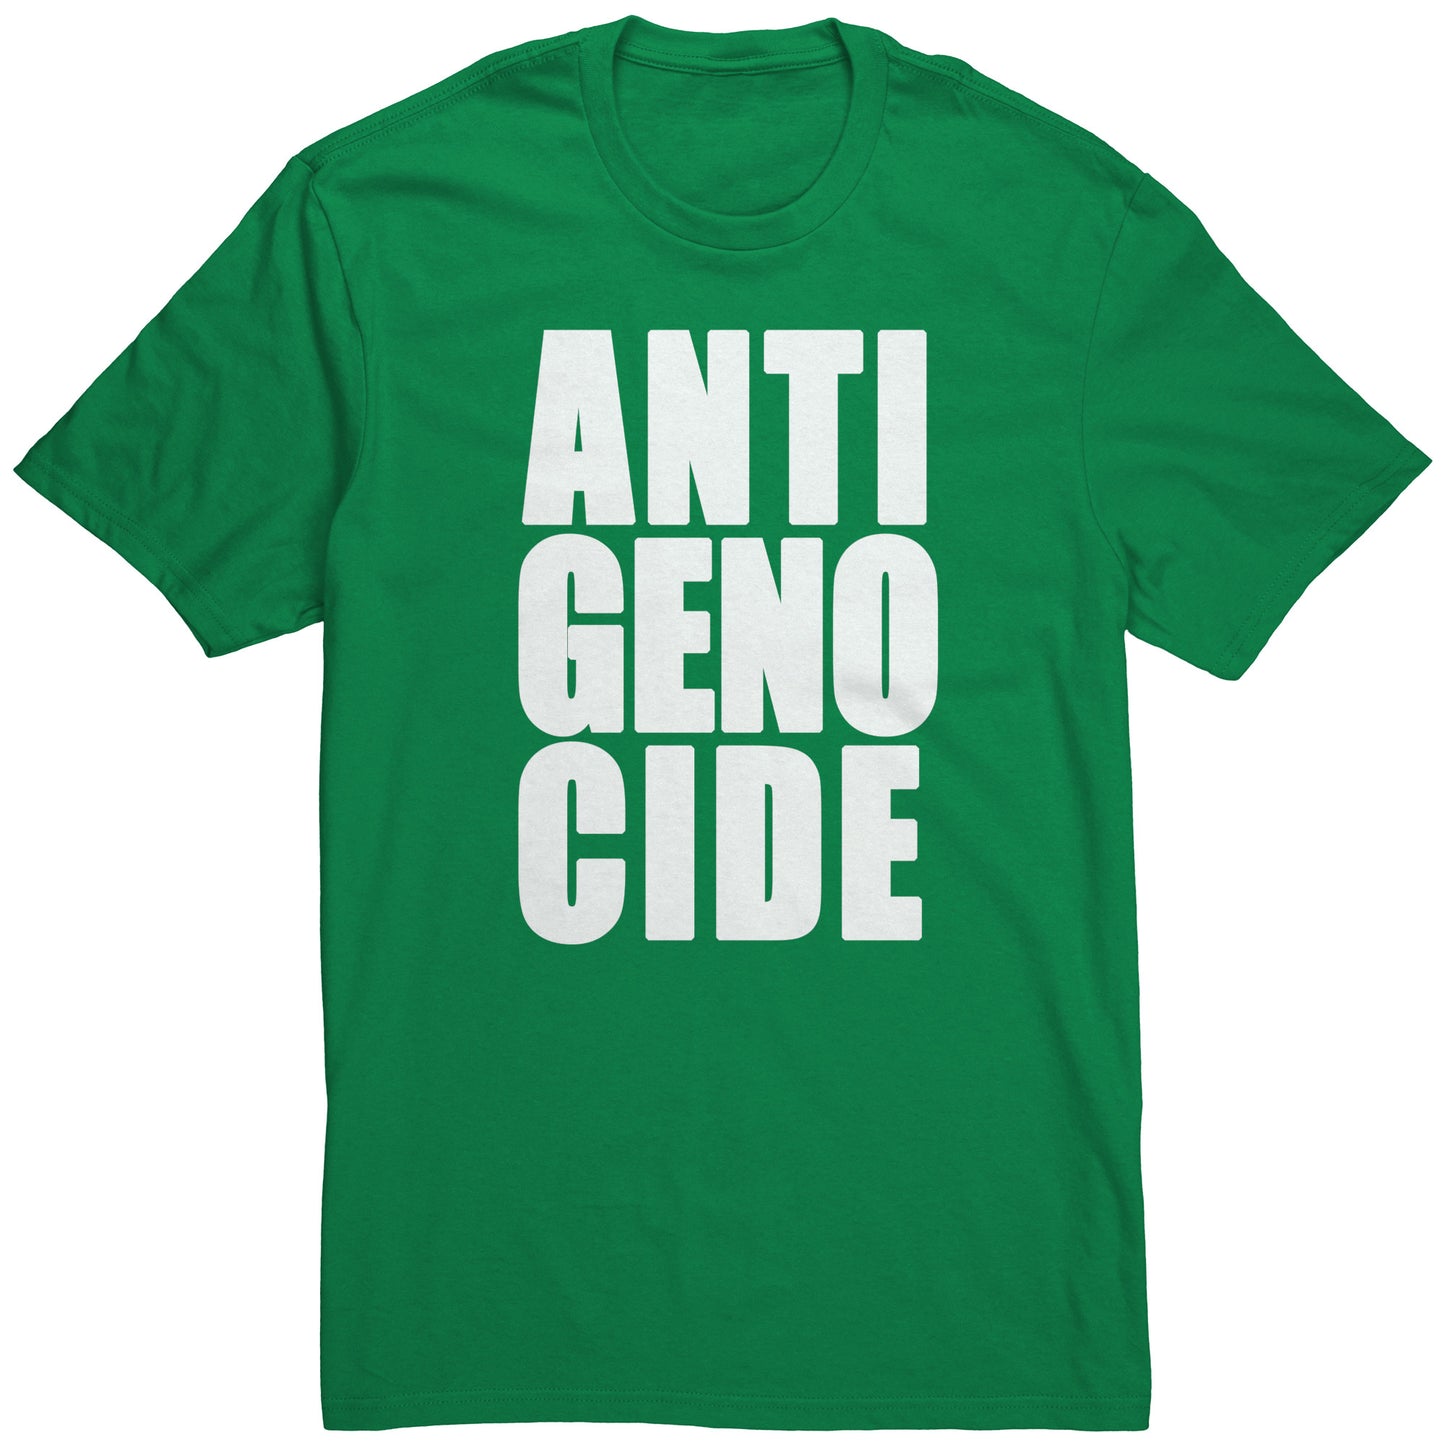 Adult Tee "Anti Genocide" (white print)